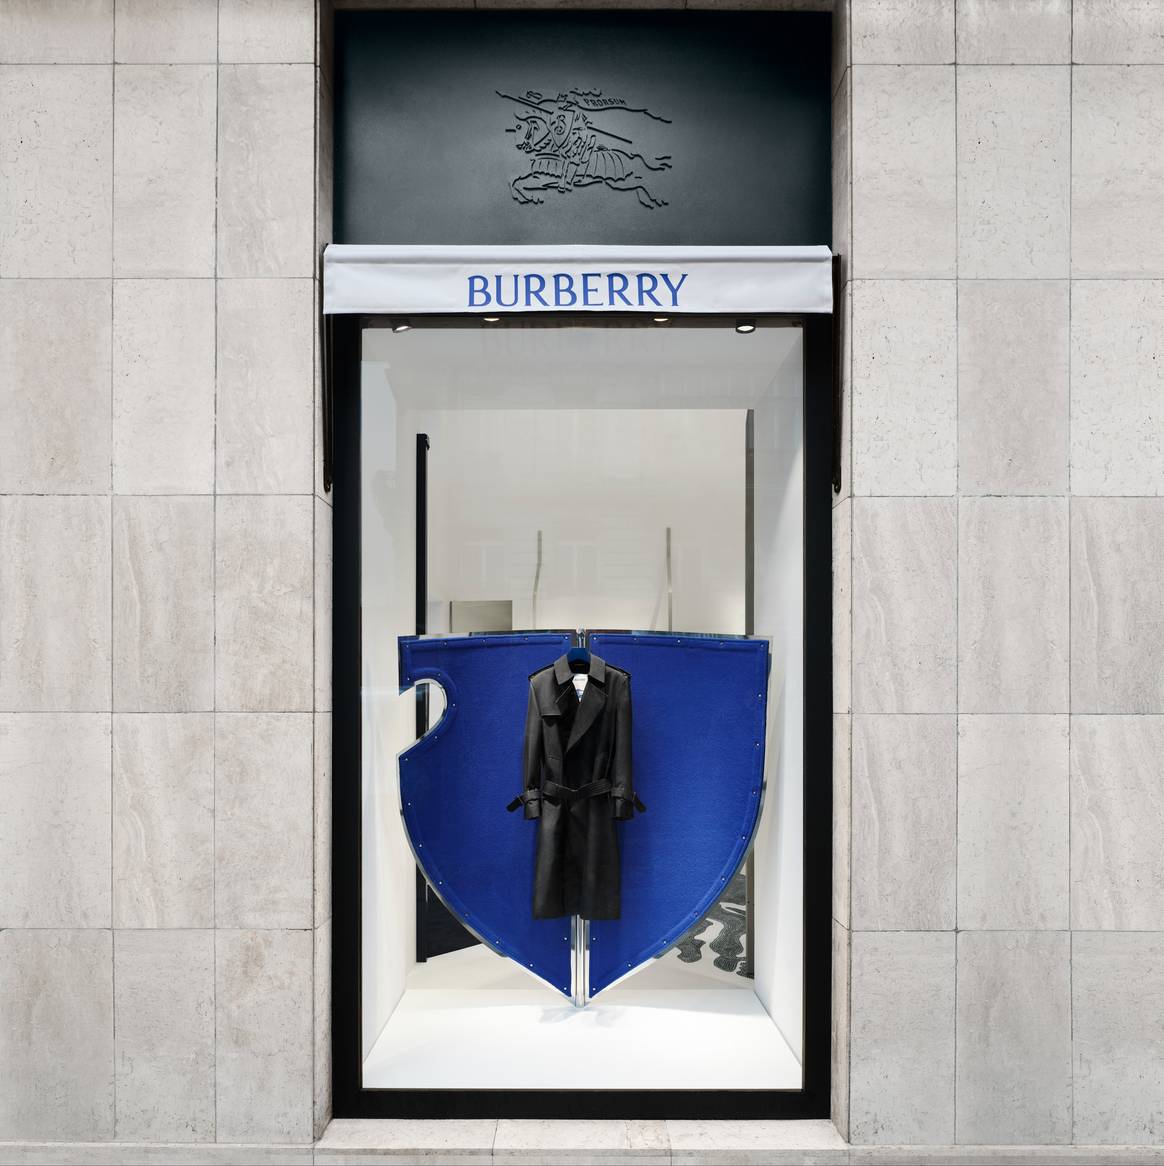 Burberry's new Paris store.